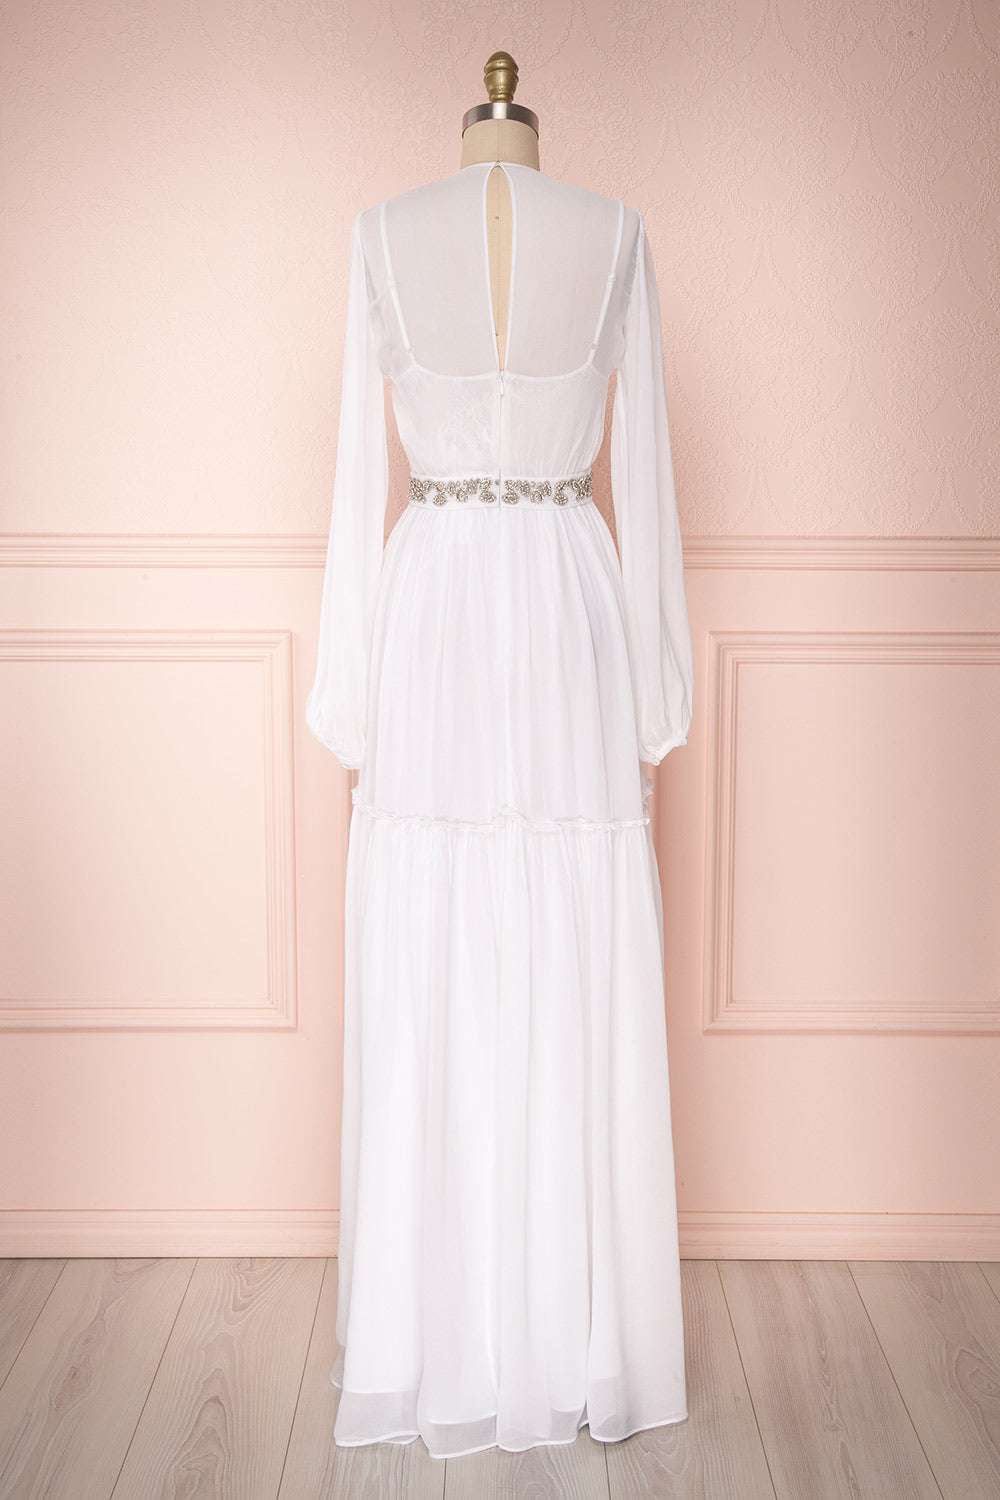 Shobara White Chiffon A-Line Maxi Dress